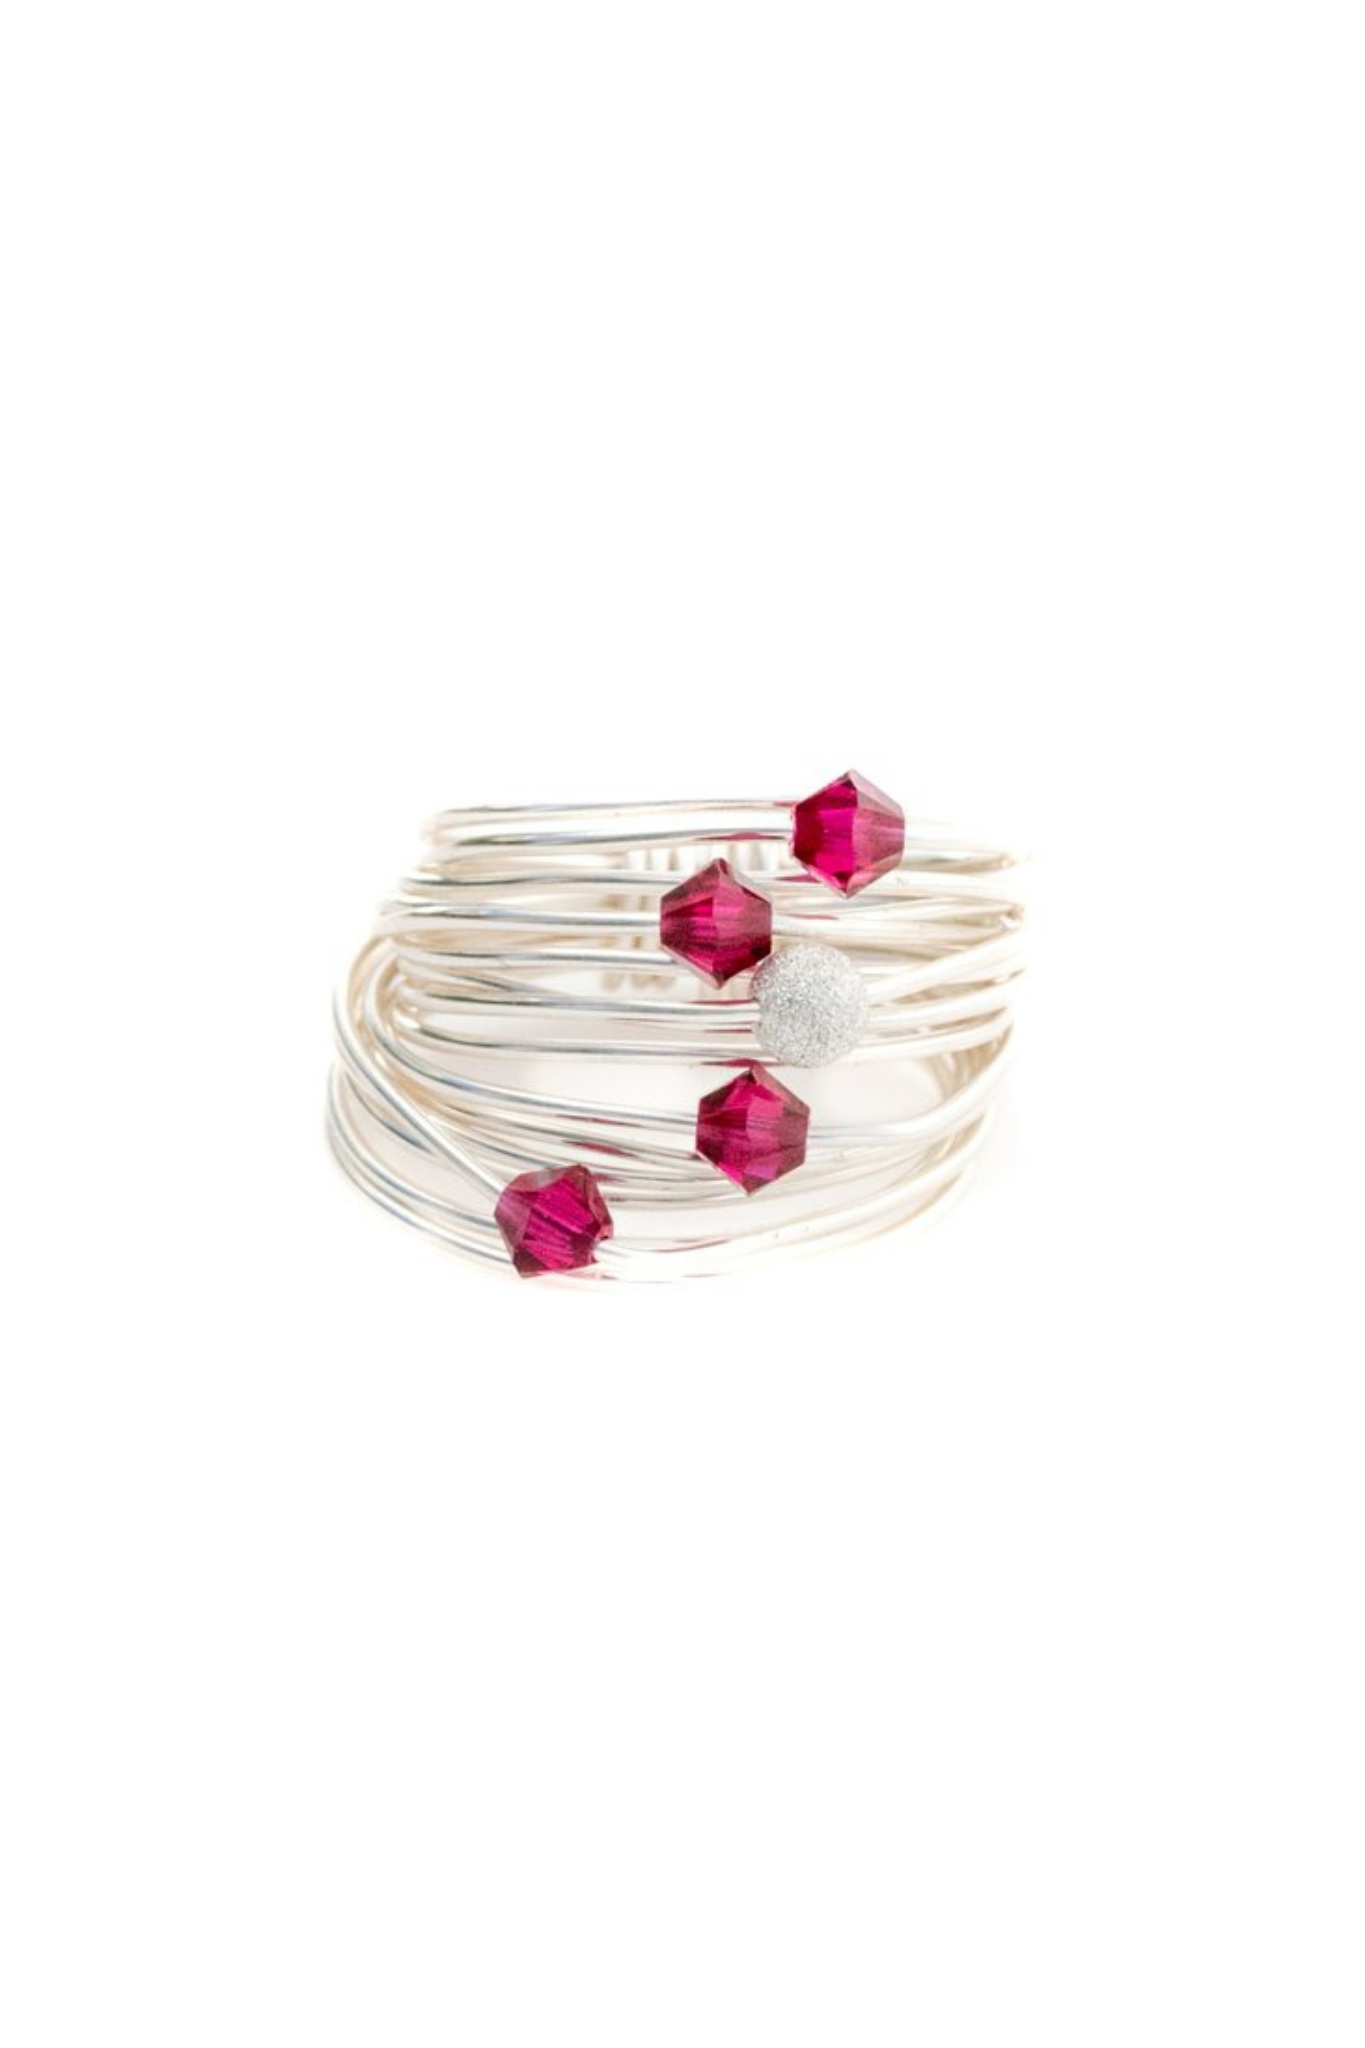 Marcia Wire Wrap Ring with Ruby Swarovski Crystals